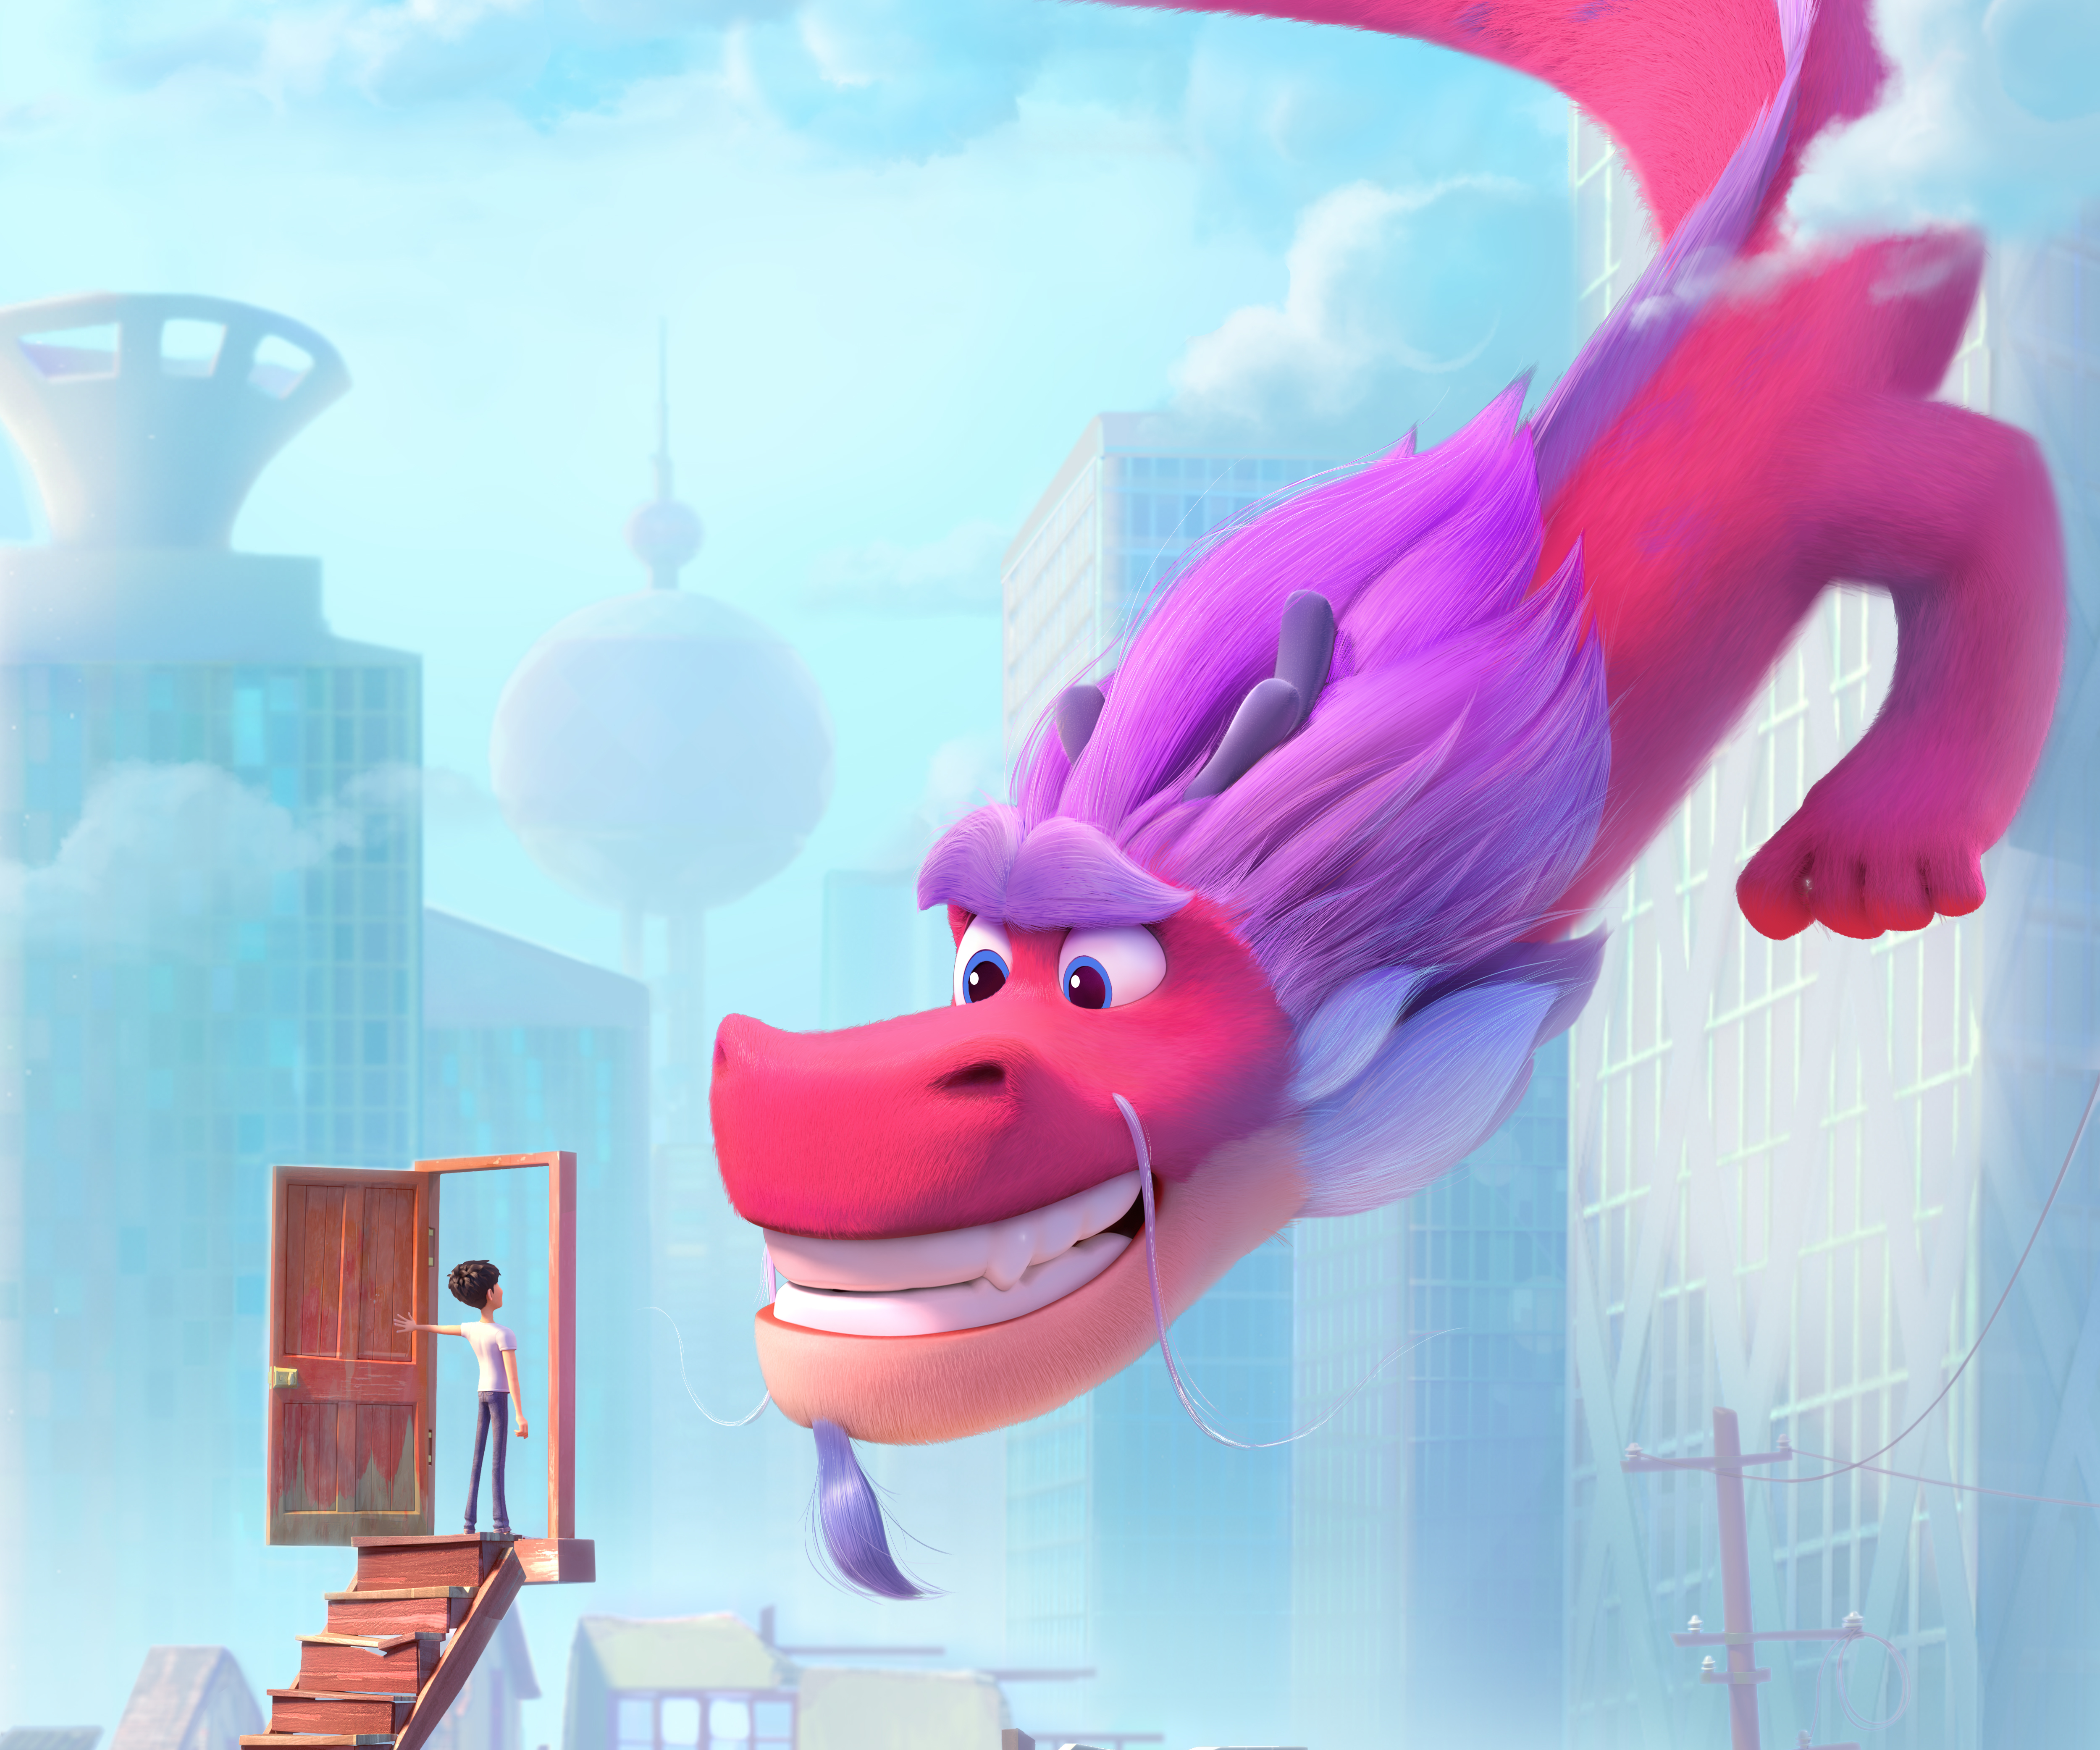 Movie Wish Dragon HD Wallpaper | Background Image